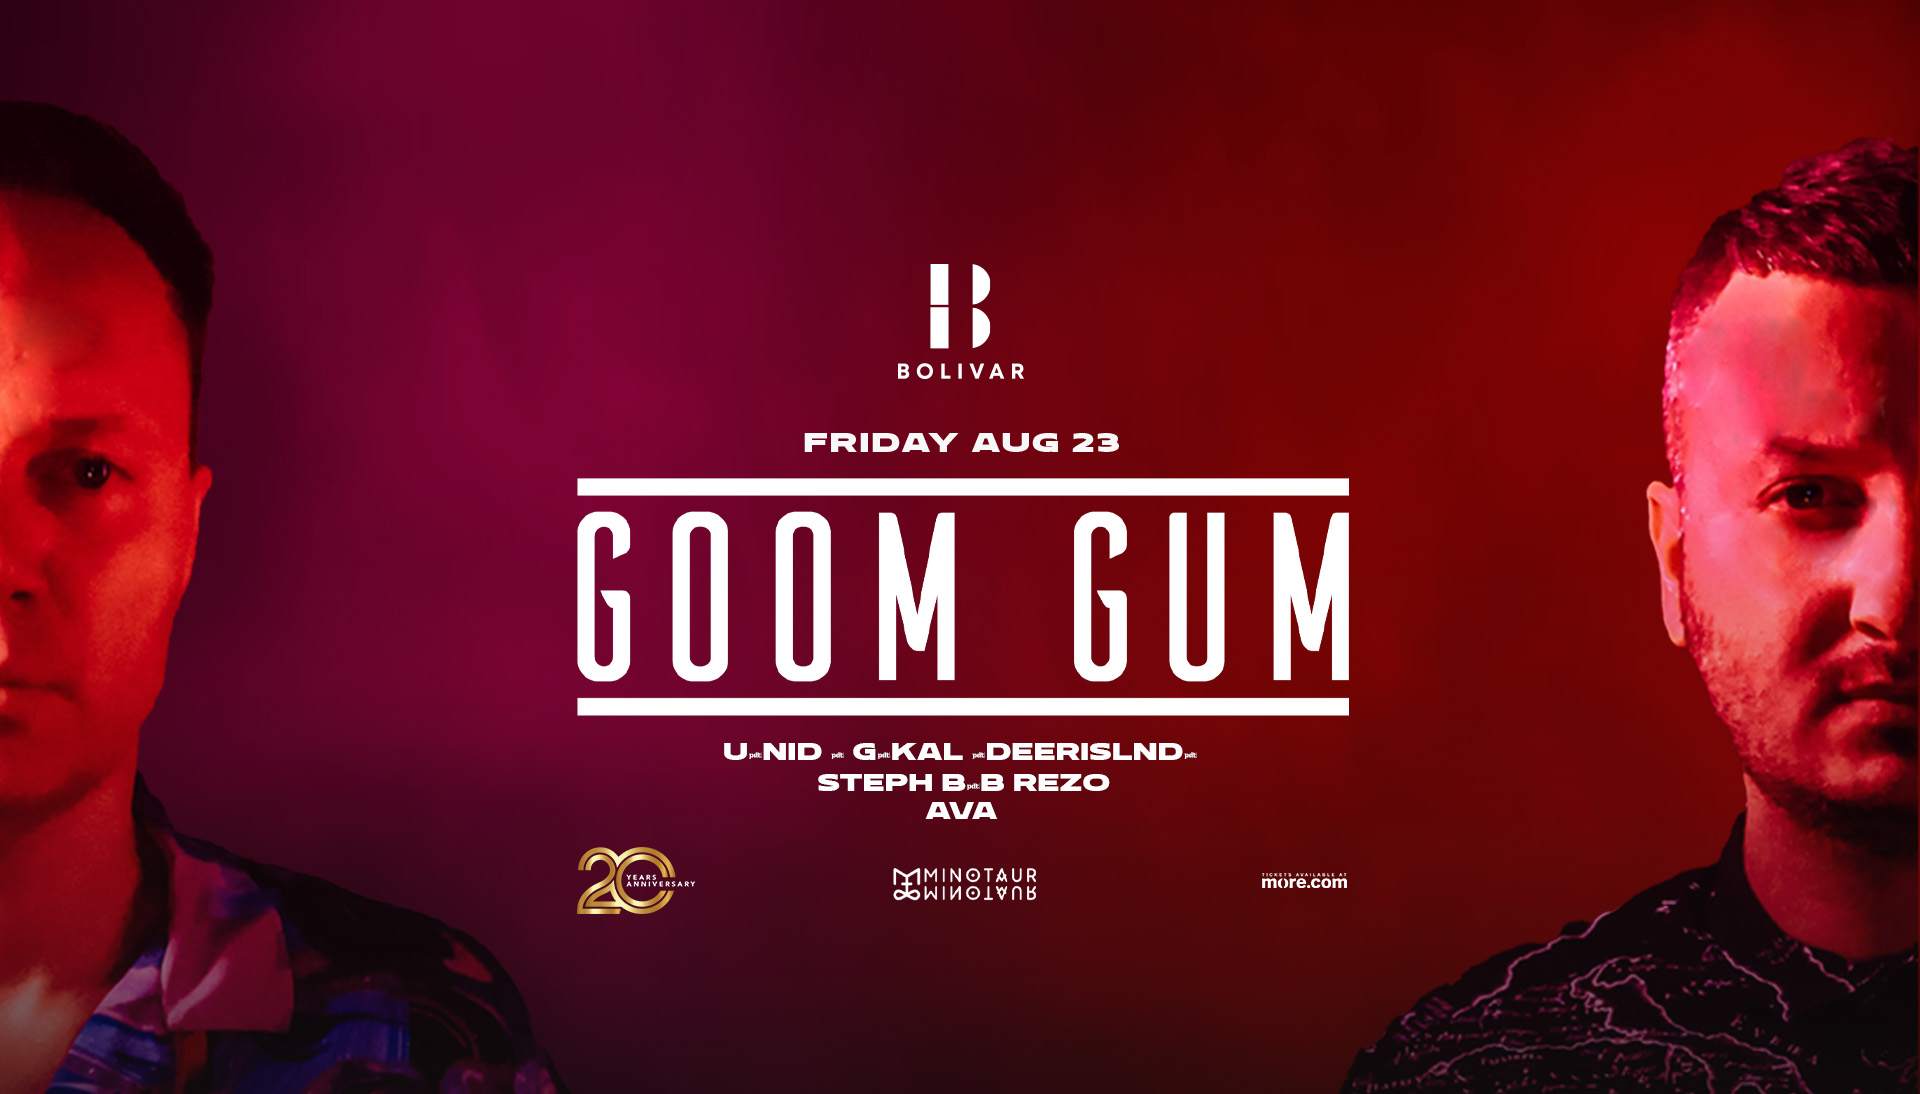 Goom Gum I Friday Aug 23 I Bolivar - フライヤー表